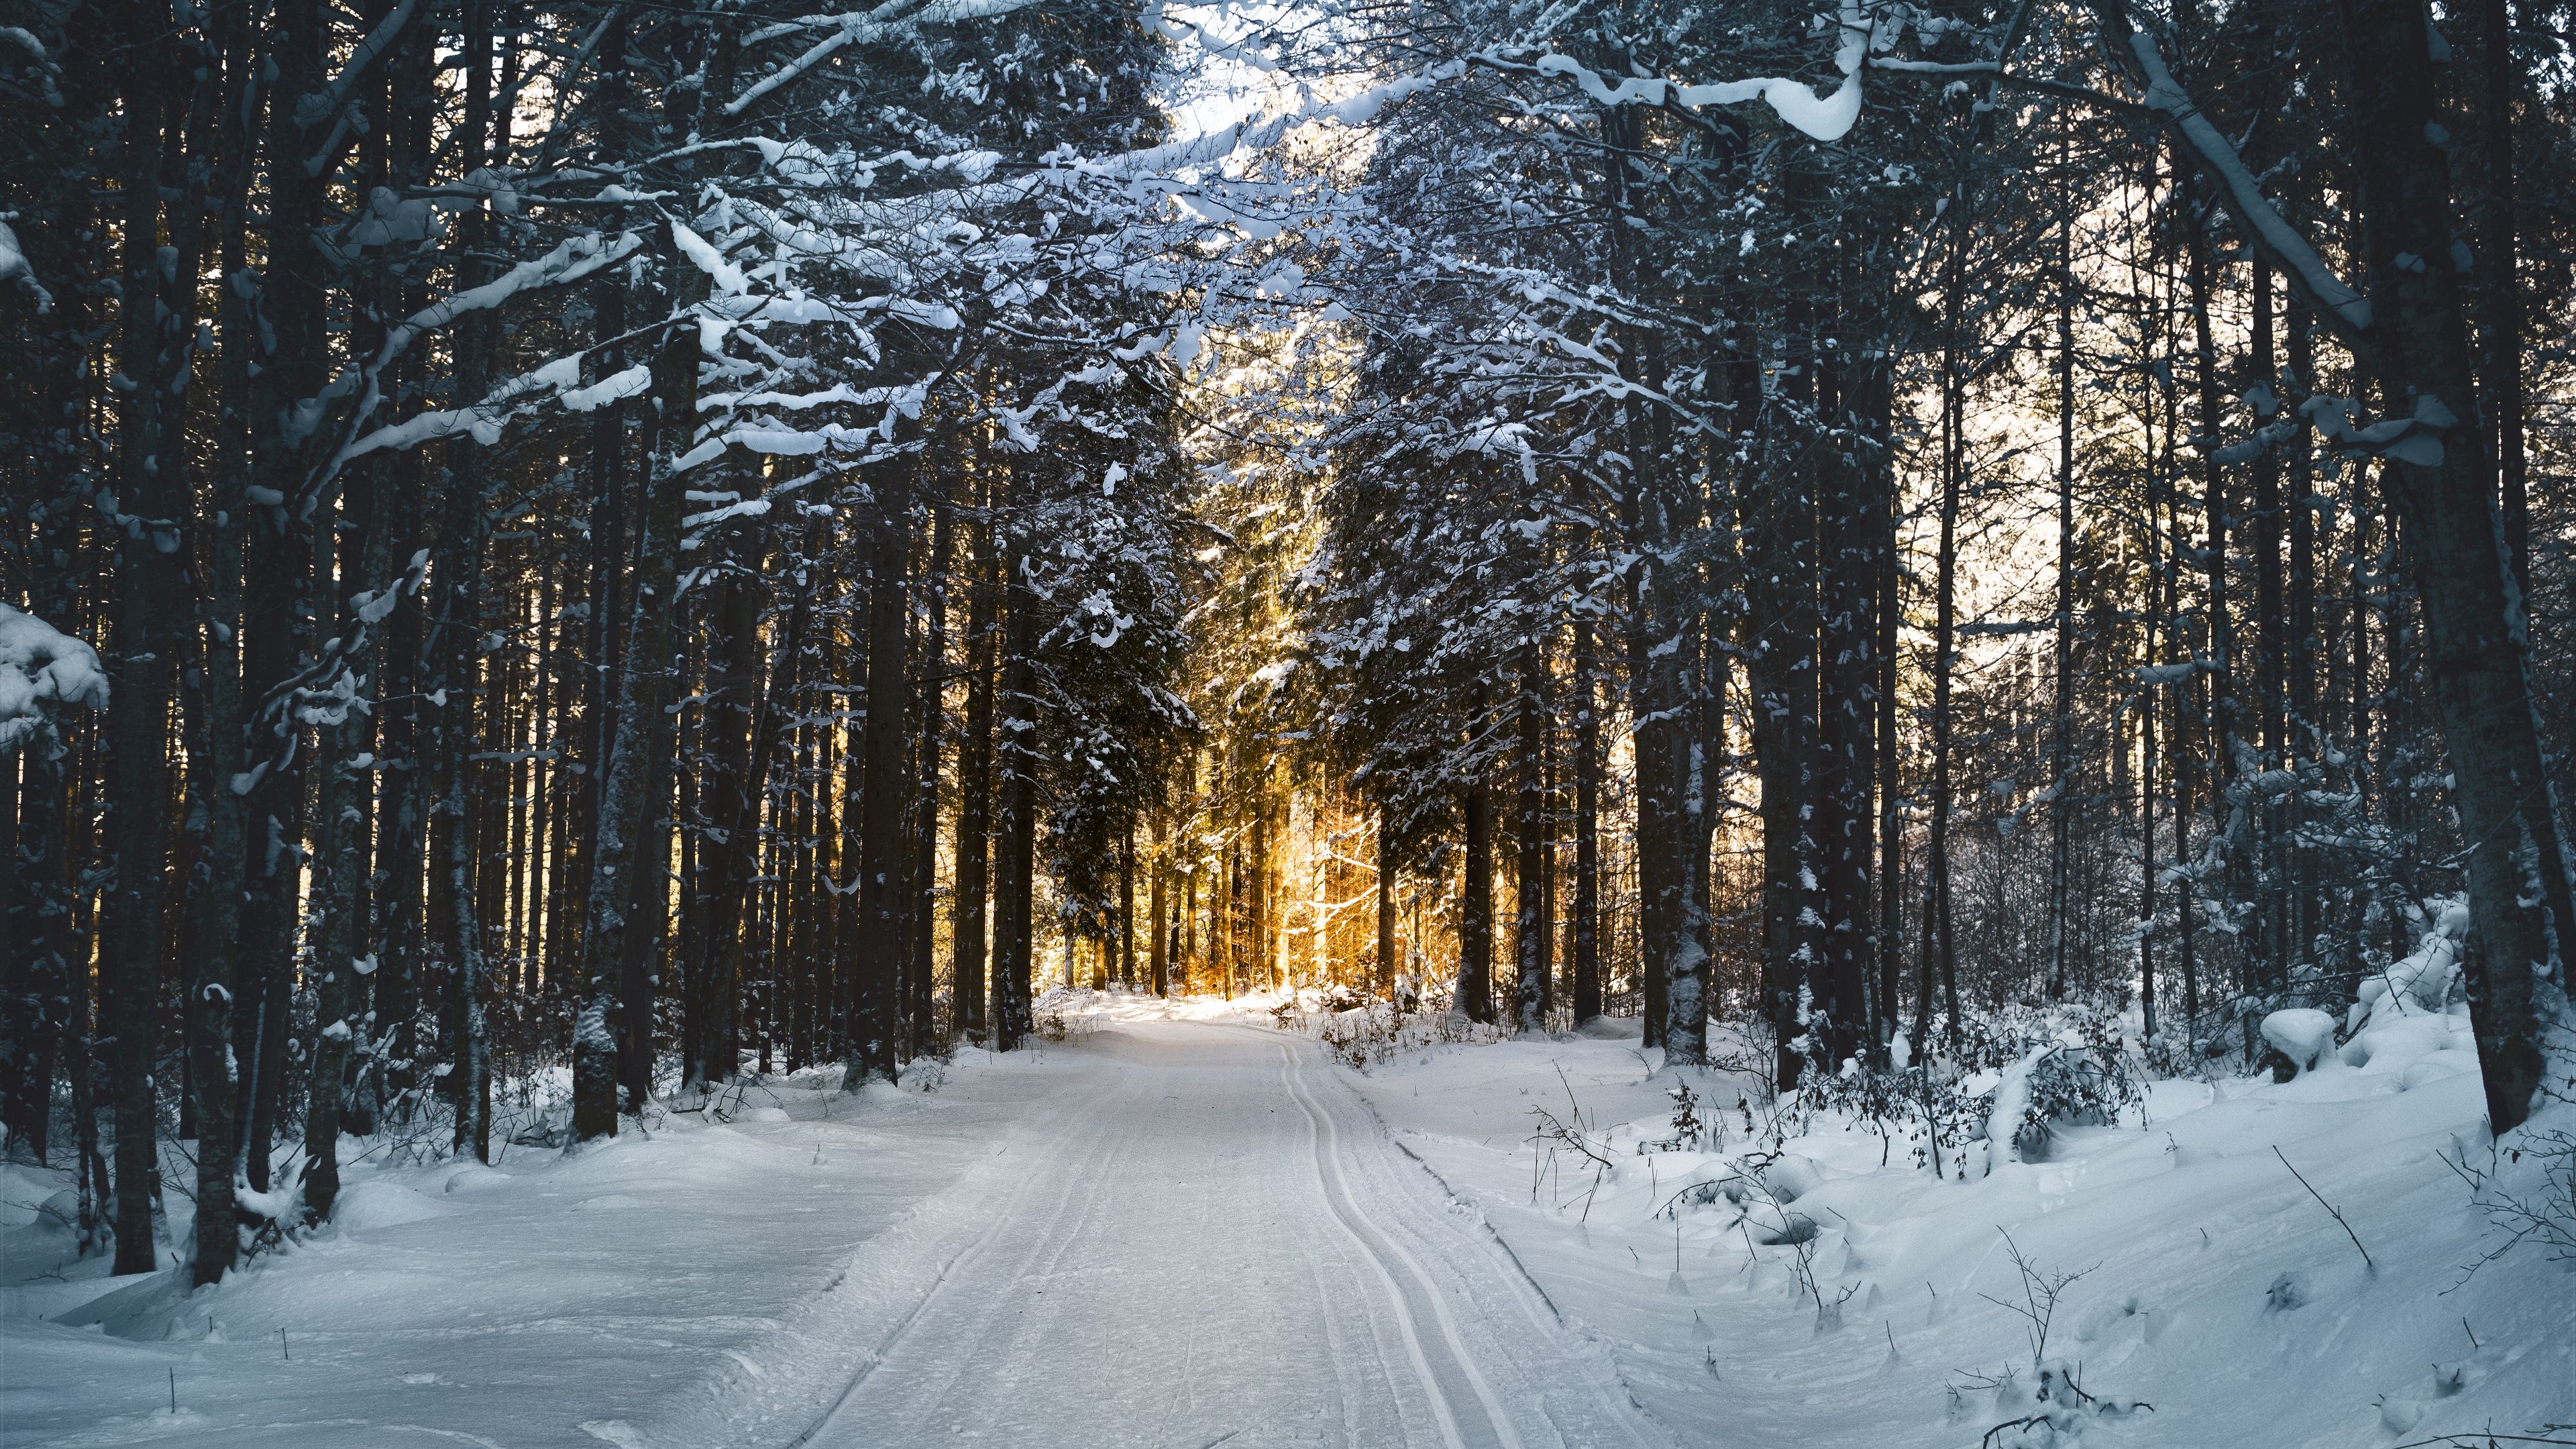 Download wallpaper 3840x2160 winter, snow, road, trees 4k uhd 16:9 HD background